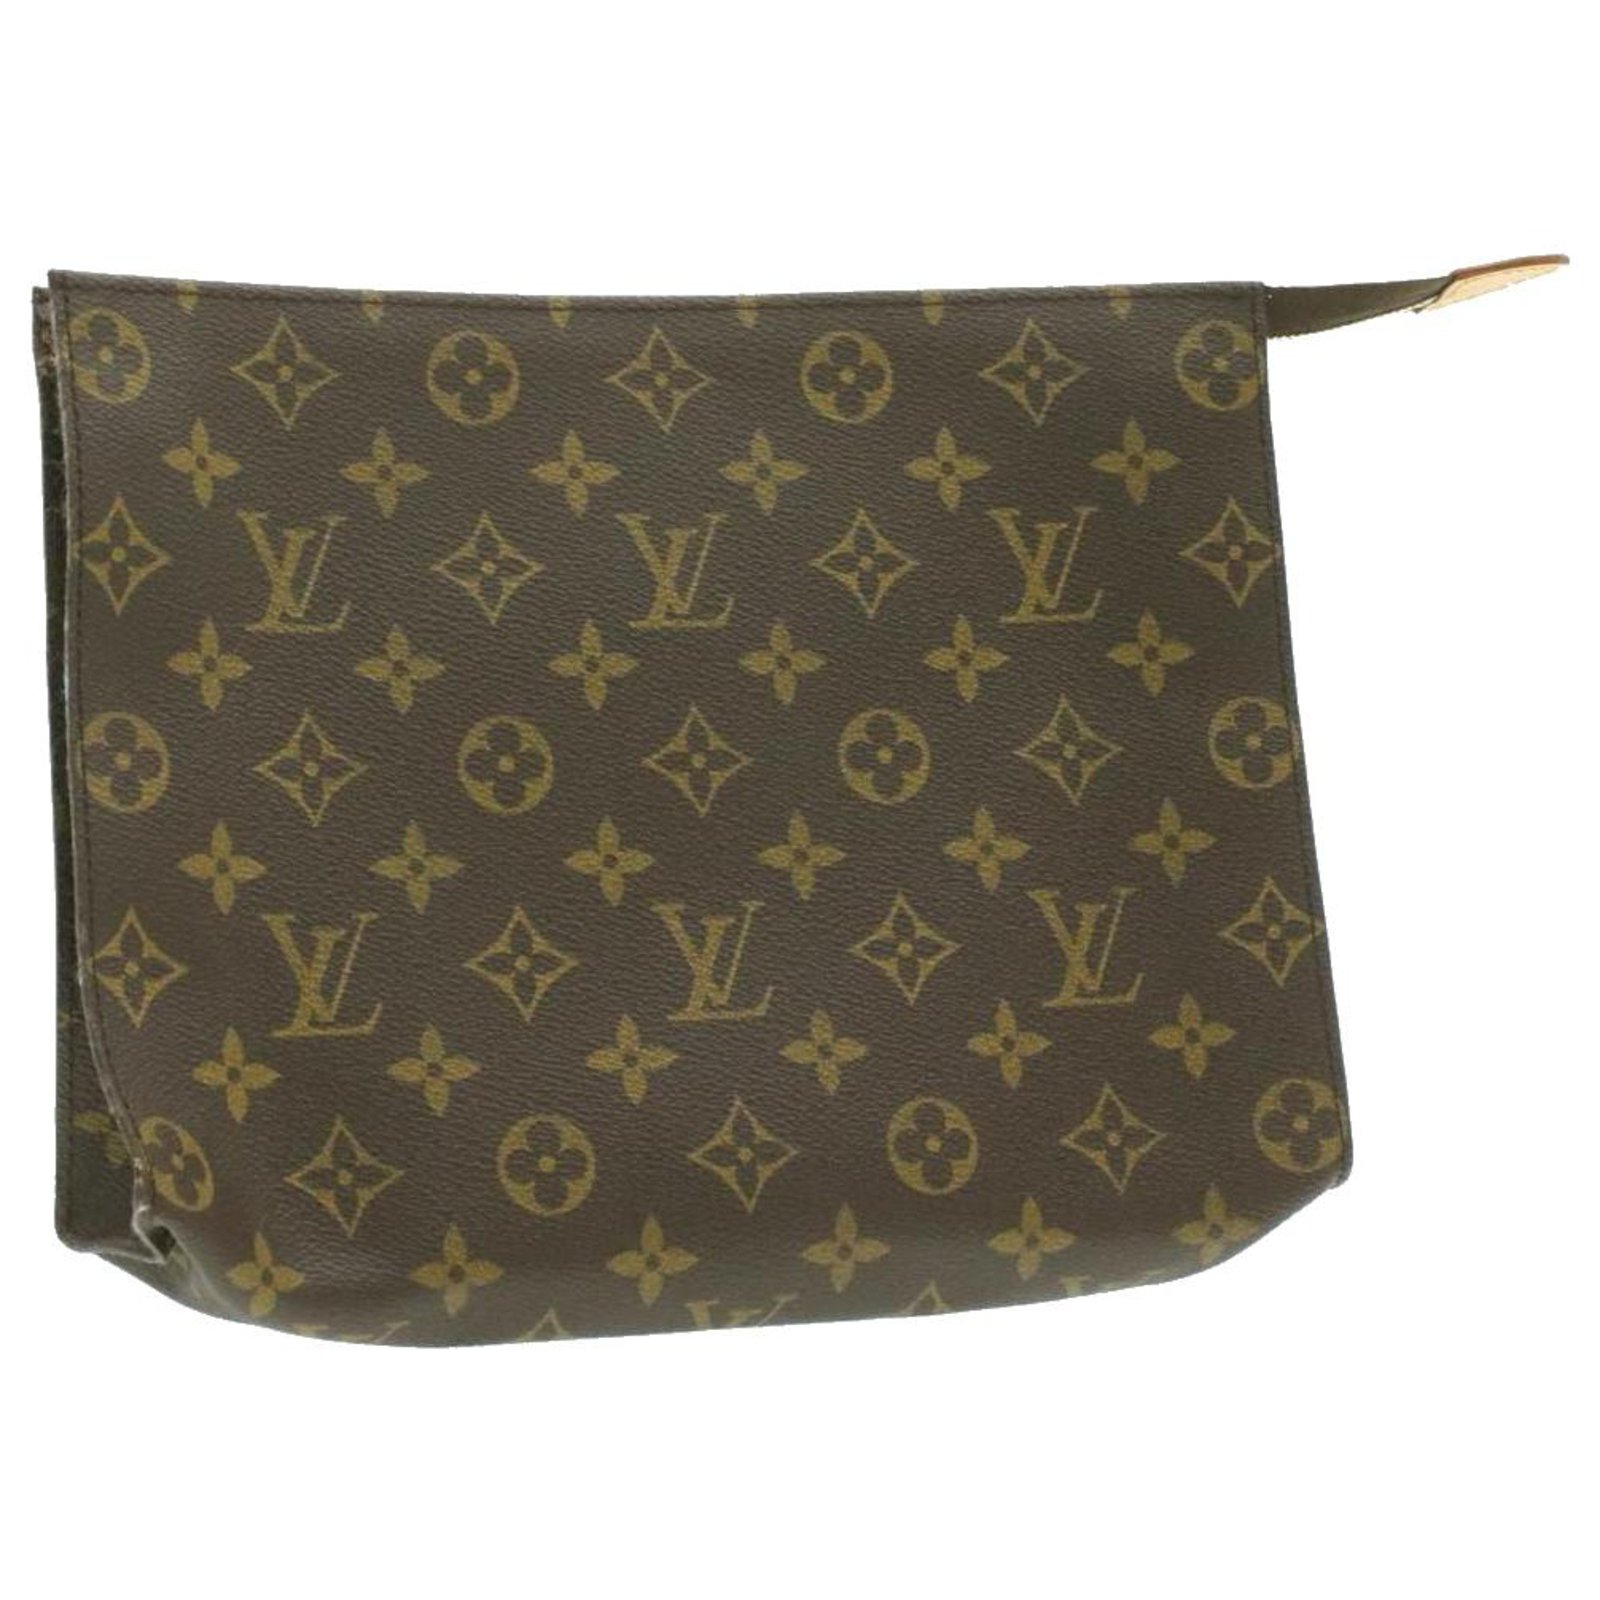 Louis Vuitton M47542 Toiletry Pouch 26 Monogram Bag